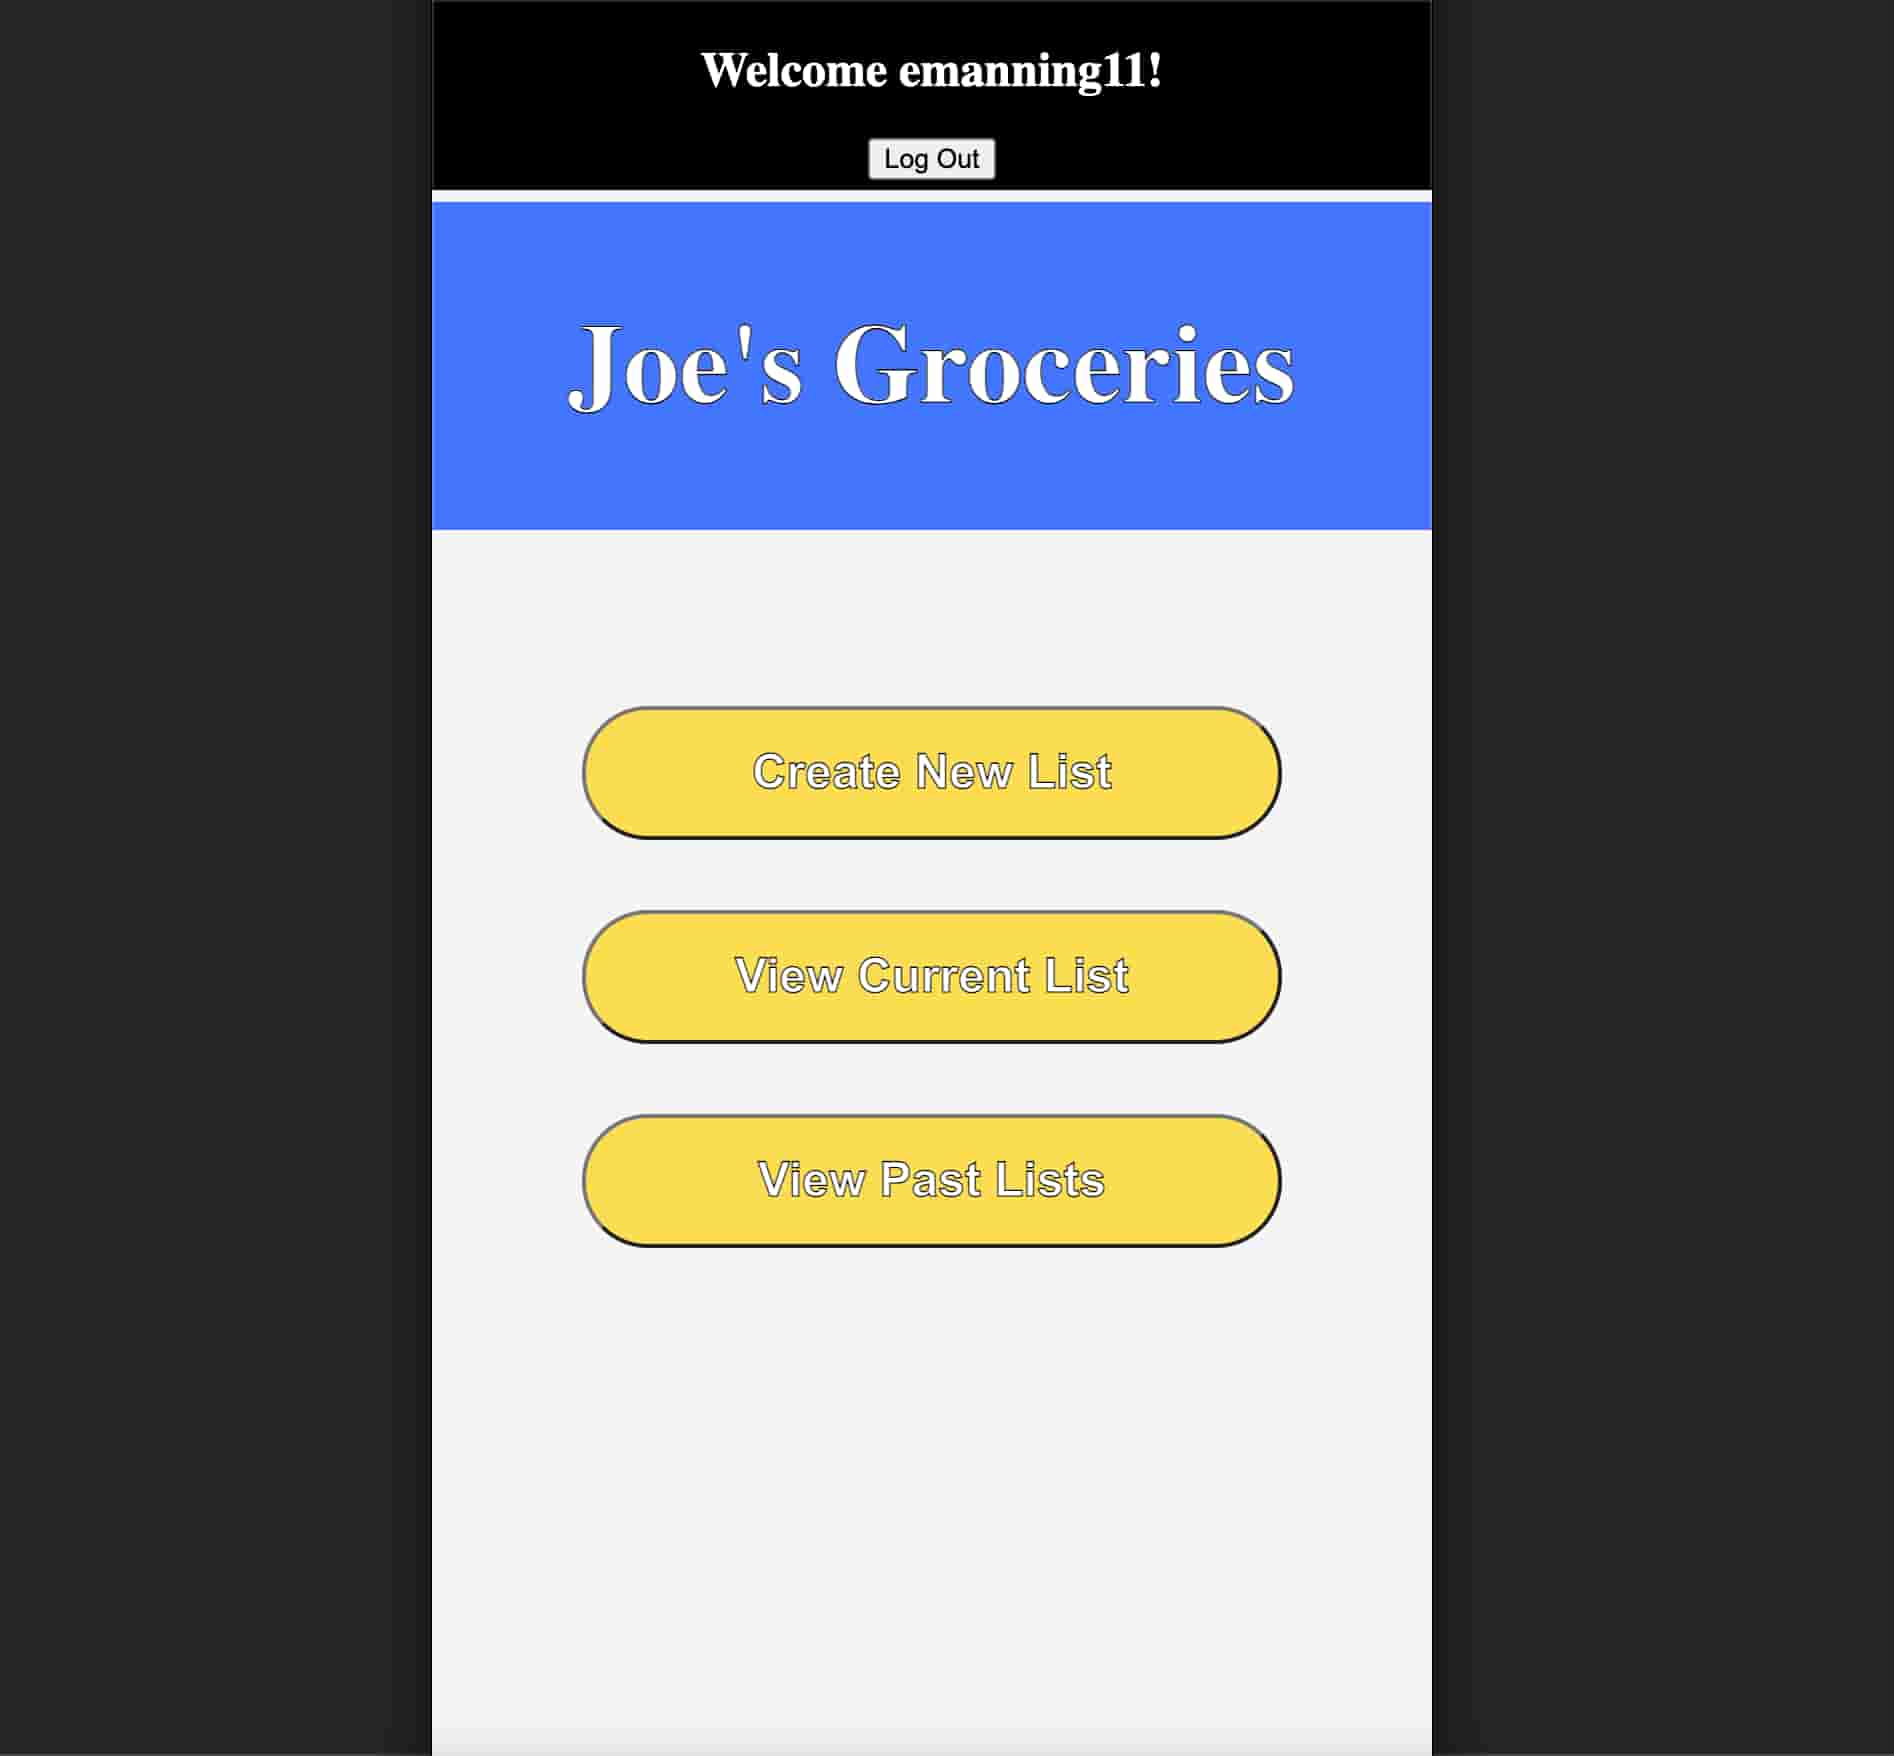 Joe's Groceries Application